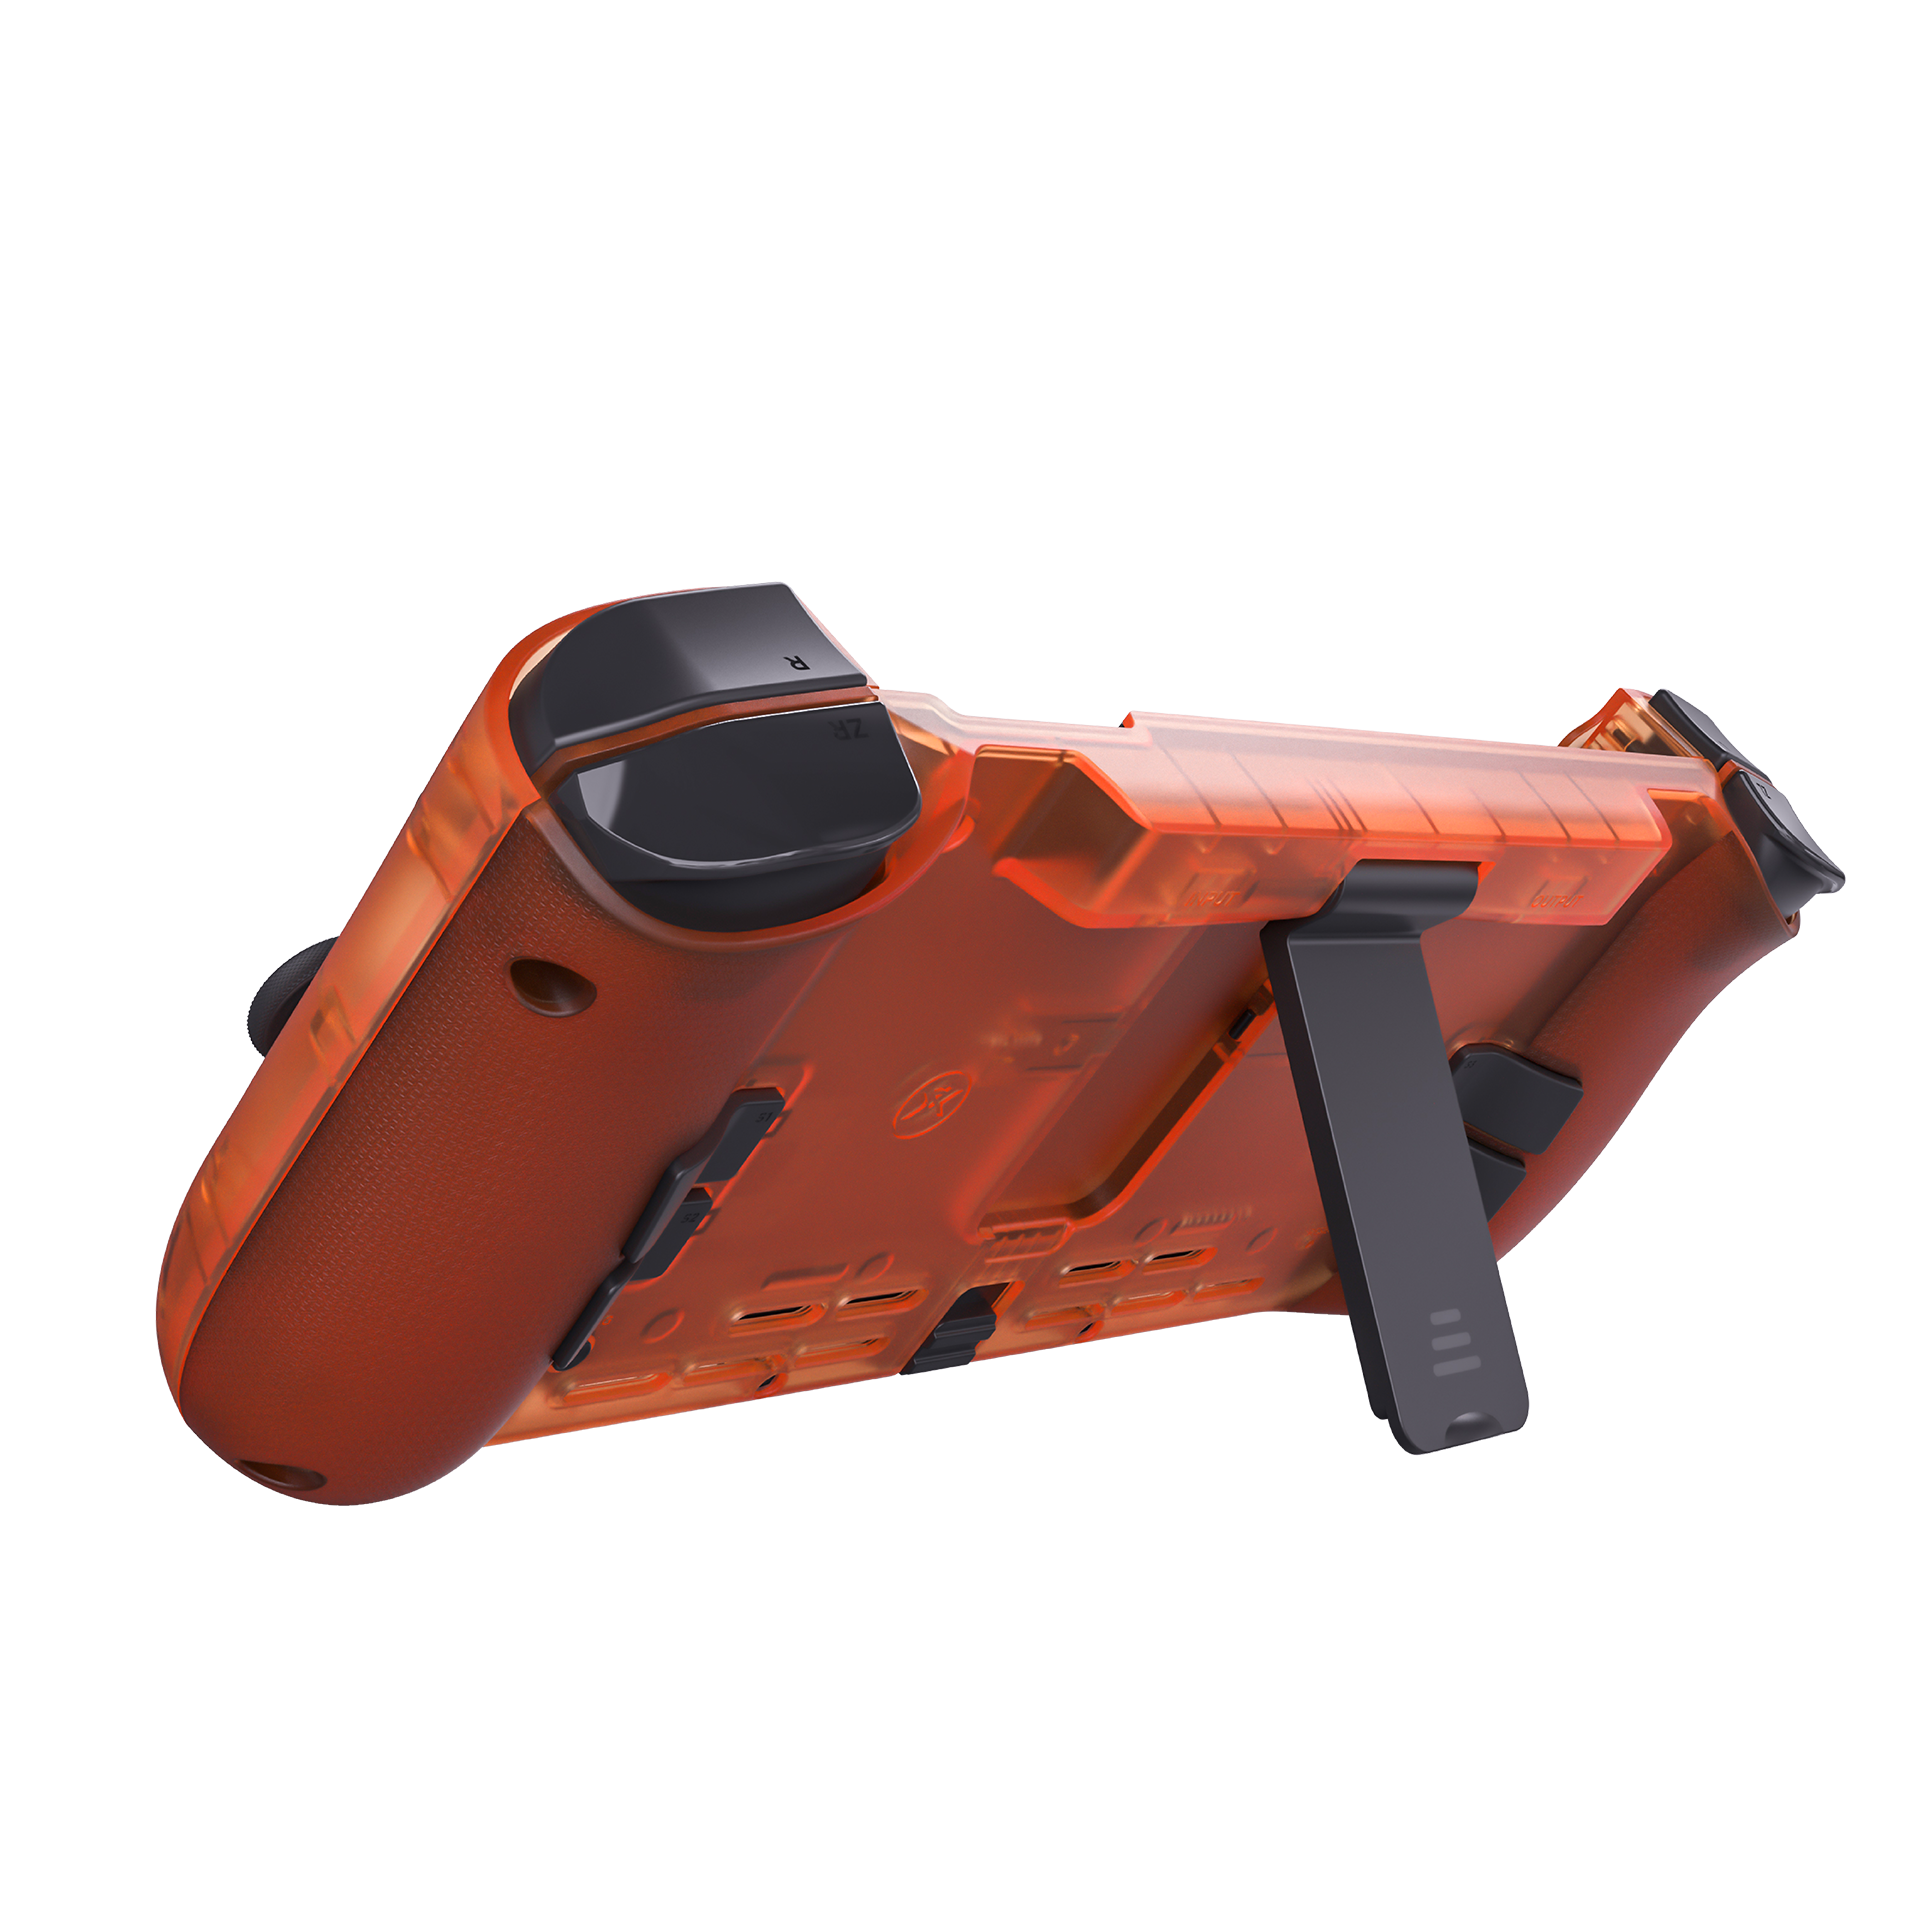 Nitro Deck Orange Zest Limited Edition with Carry Case